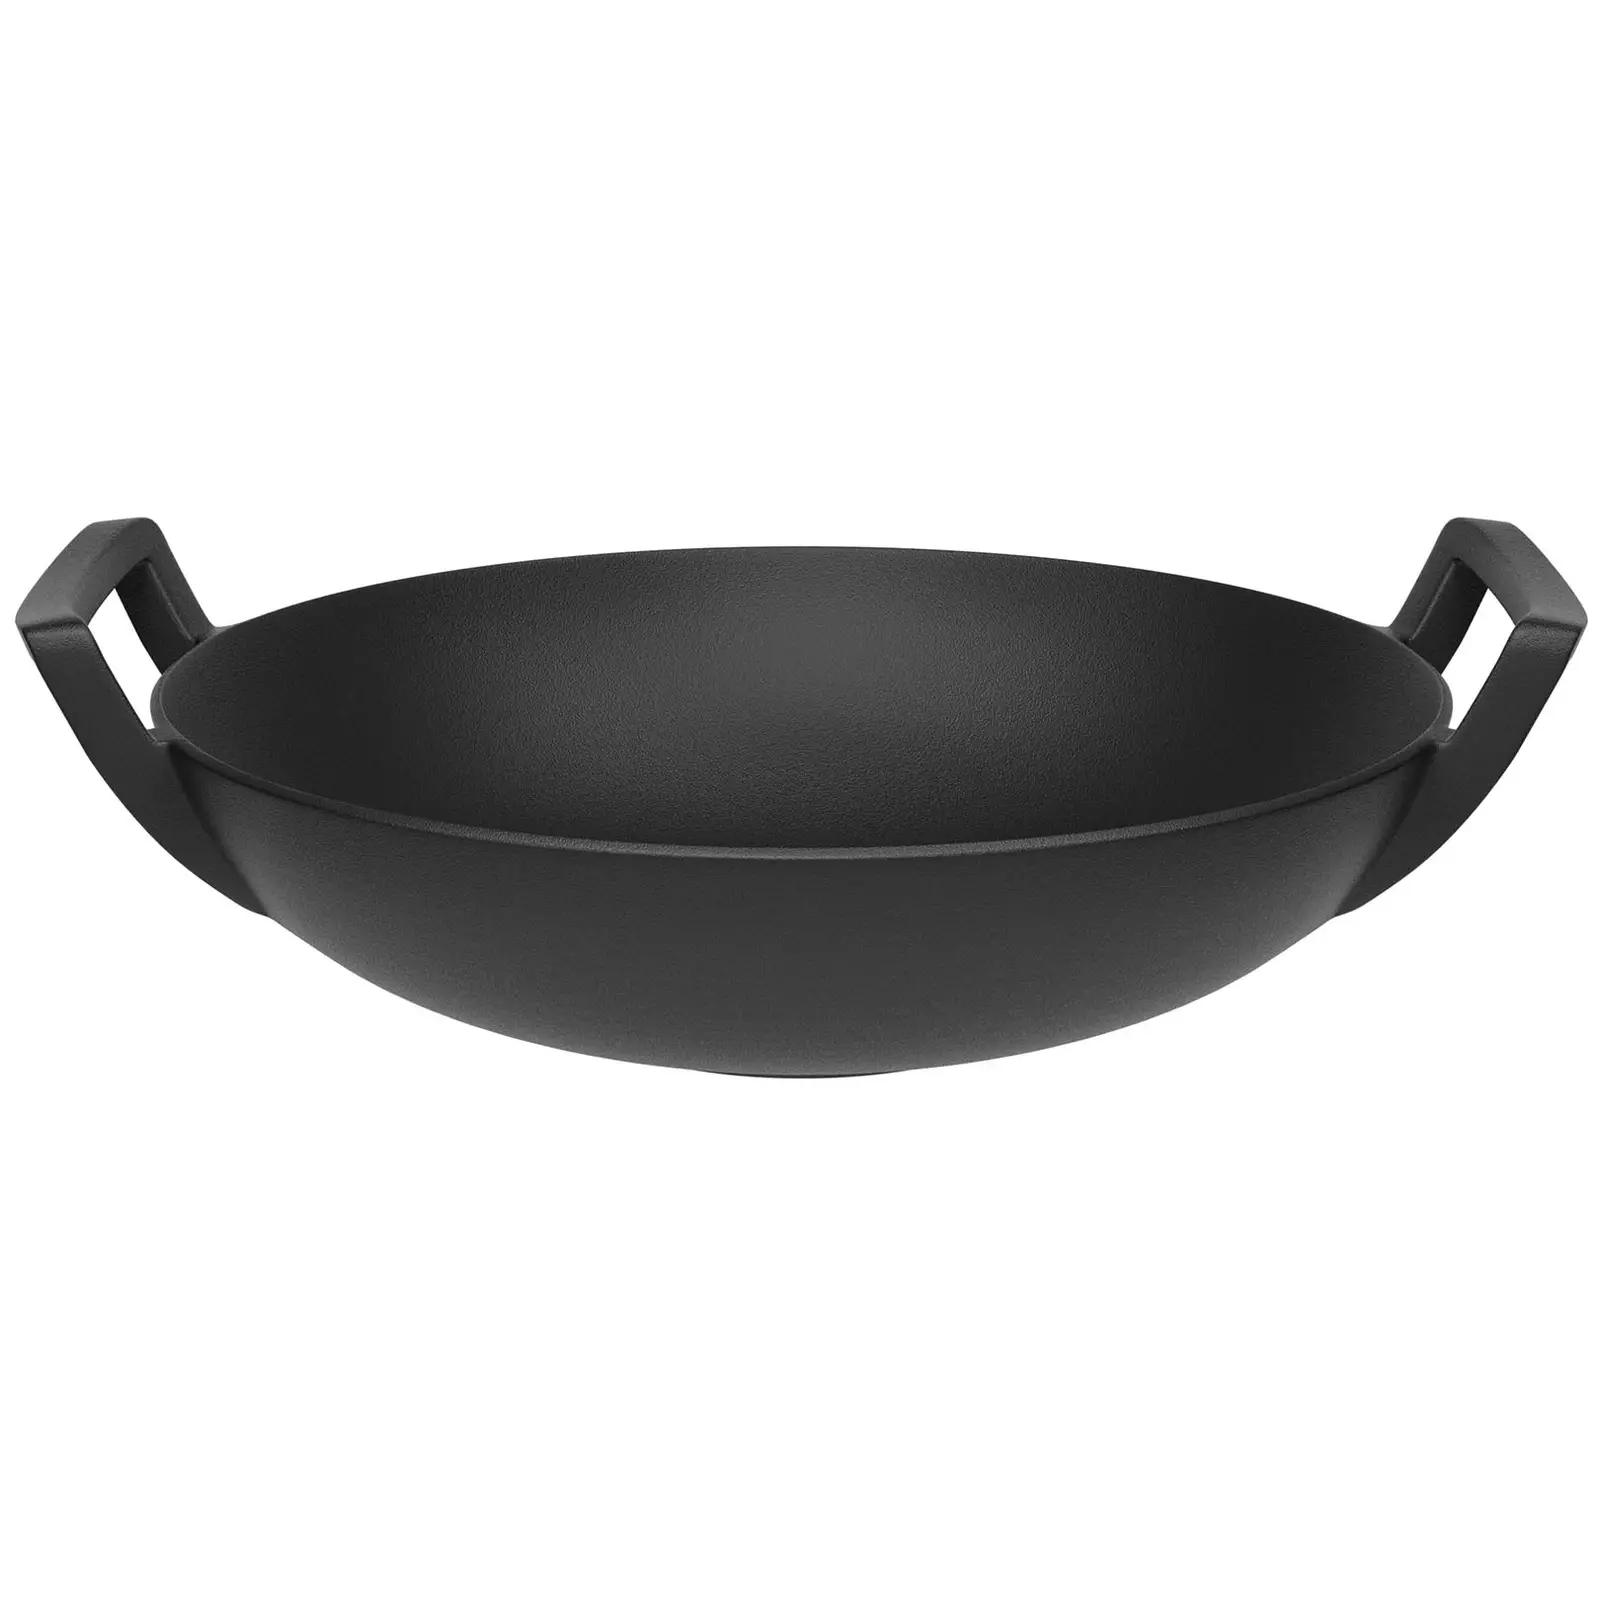 Litinová pánev wok - Ø 32 x 11 cm